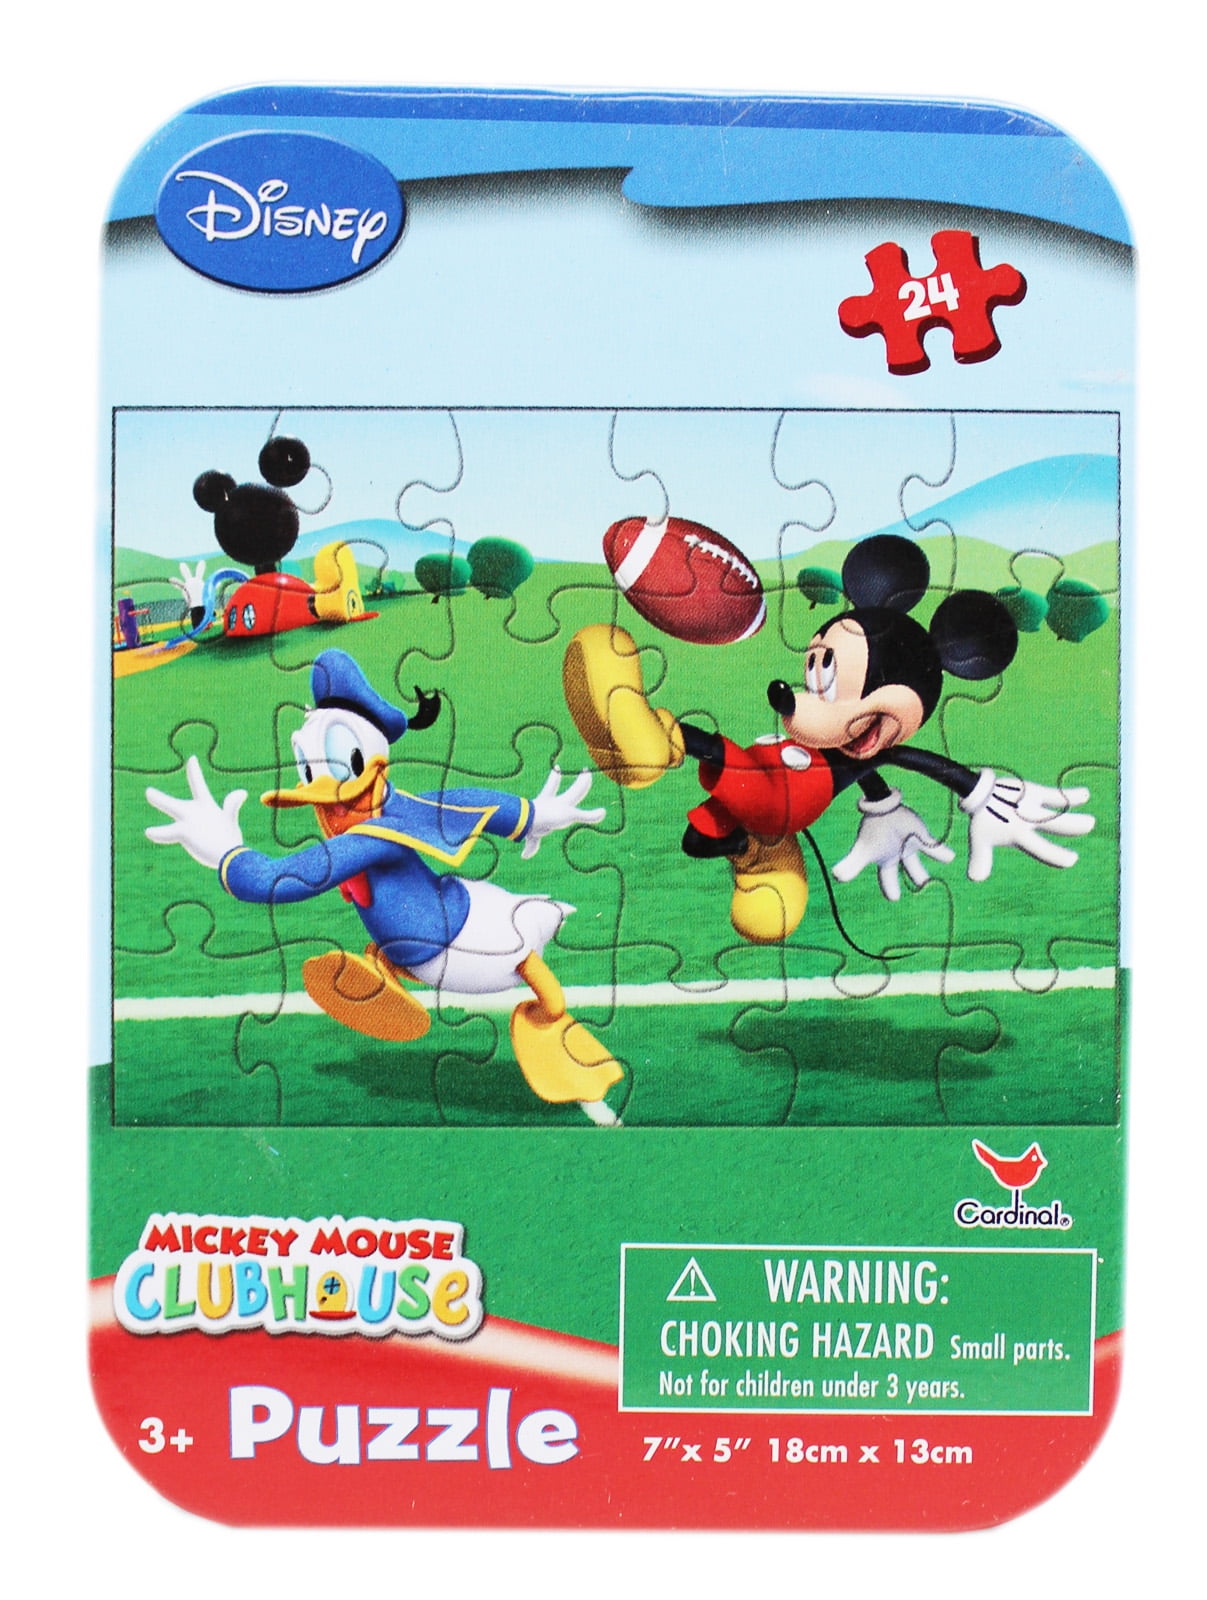 Disney Junior Mickey Mouse Funhouse Dino Rover 6-piece Play